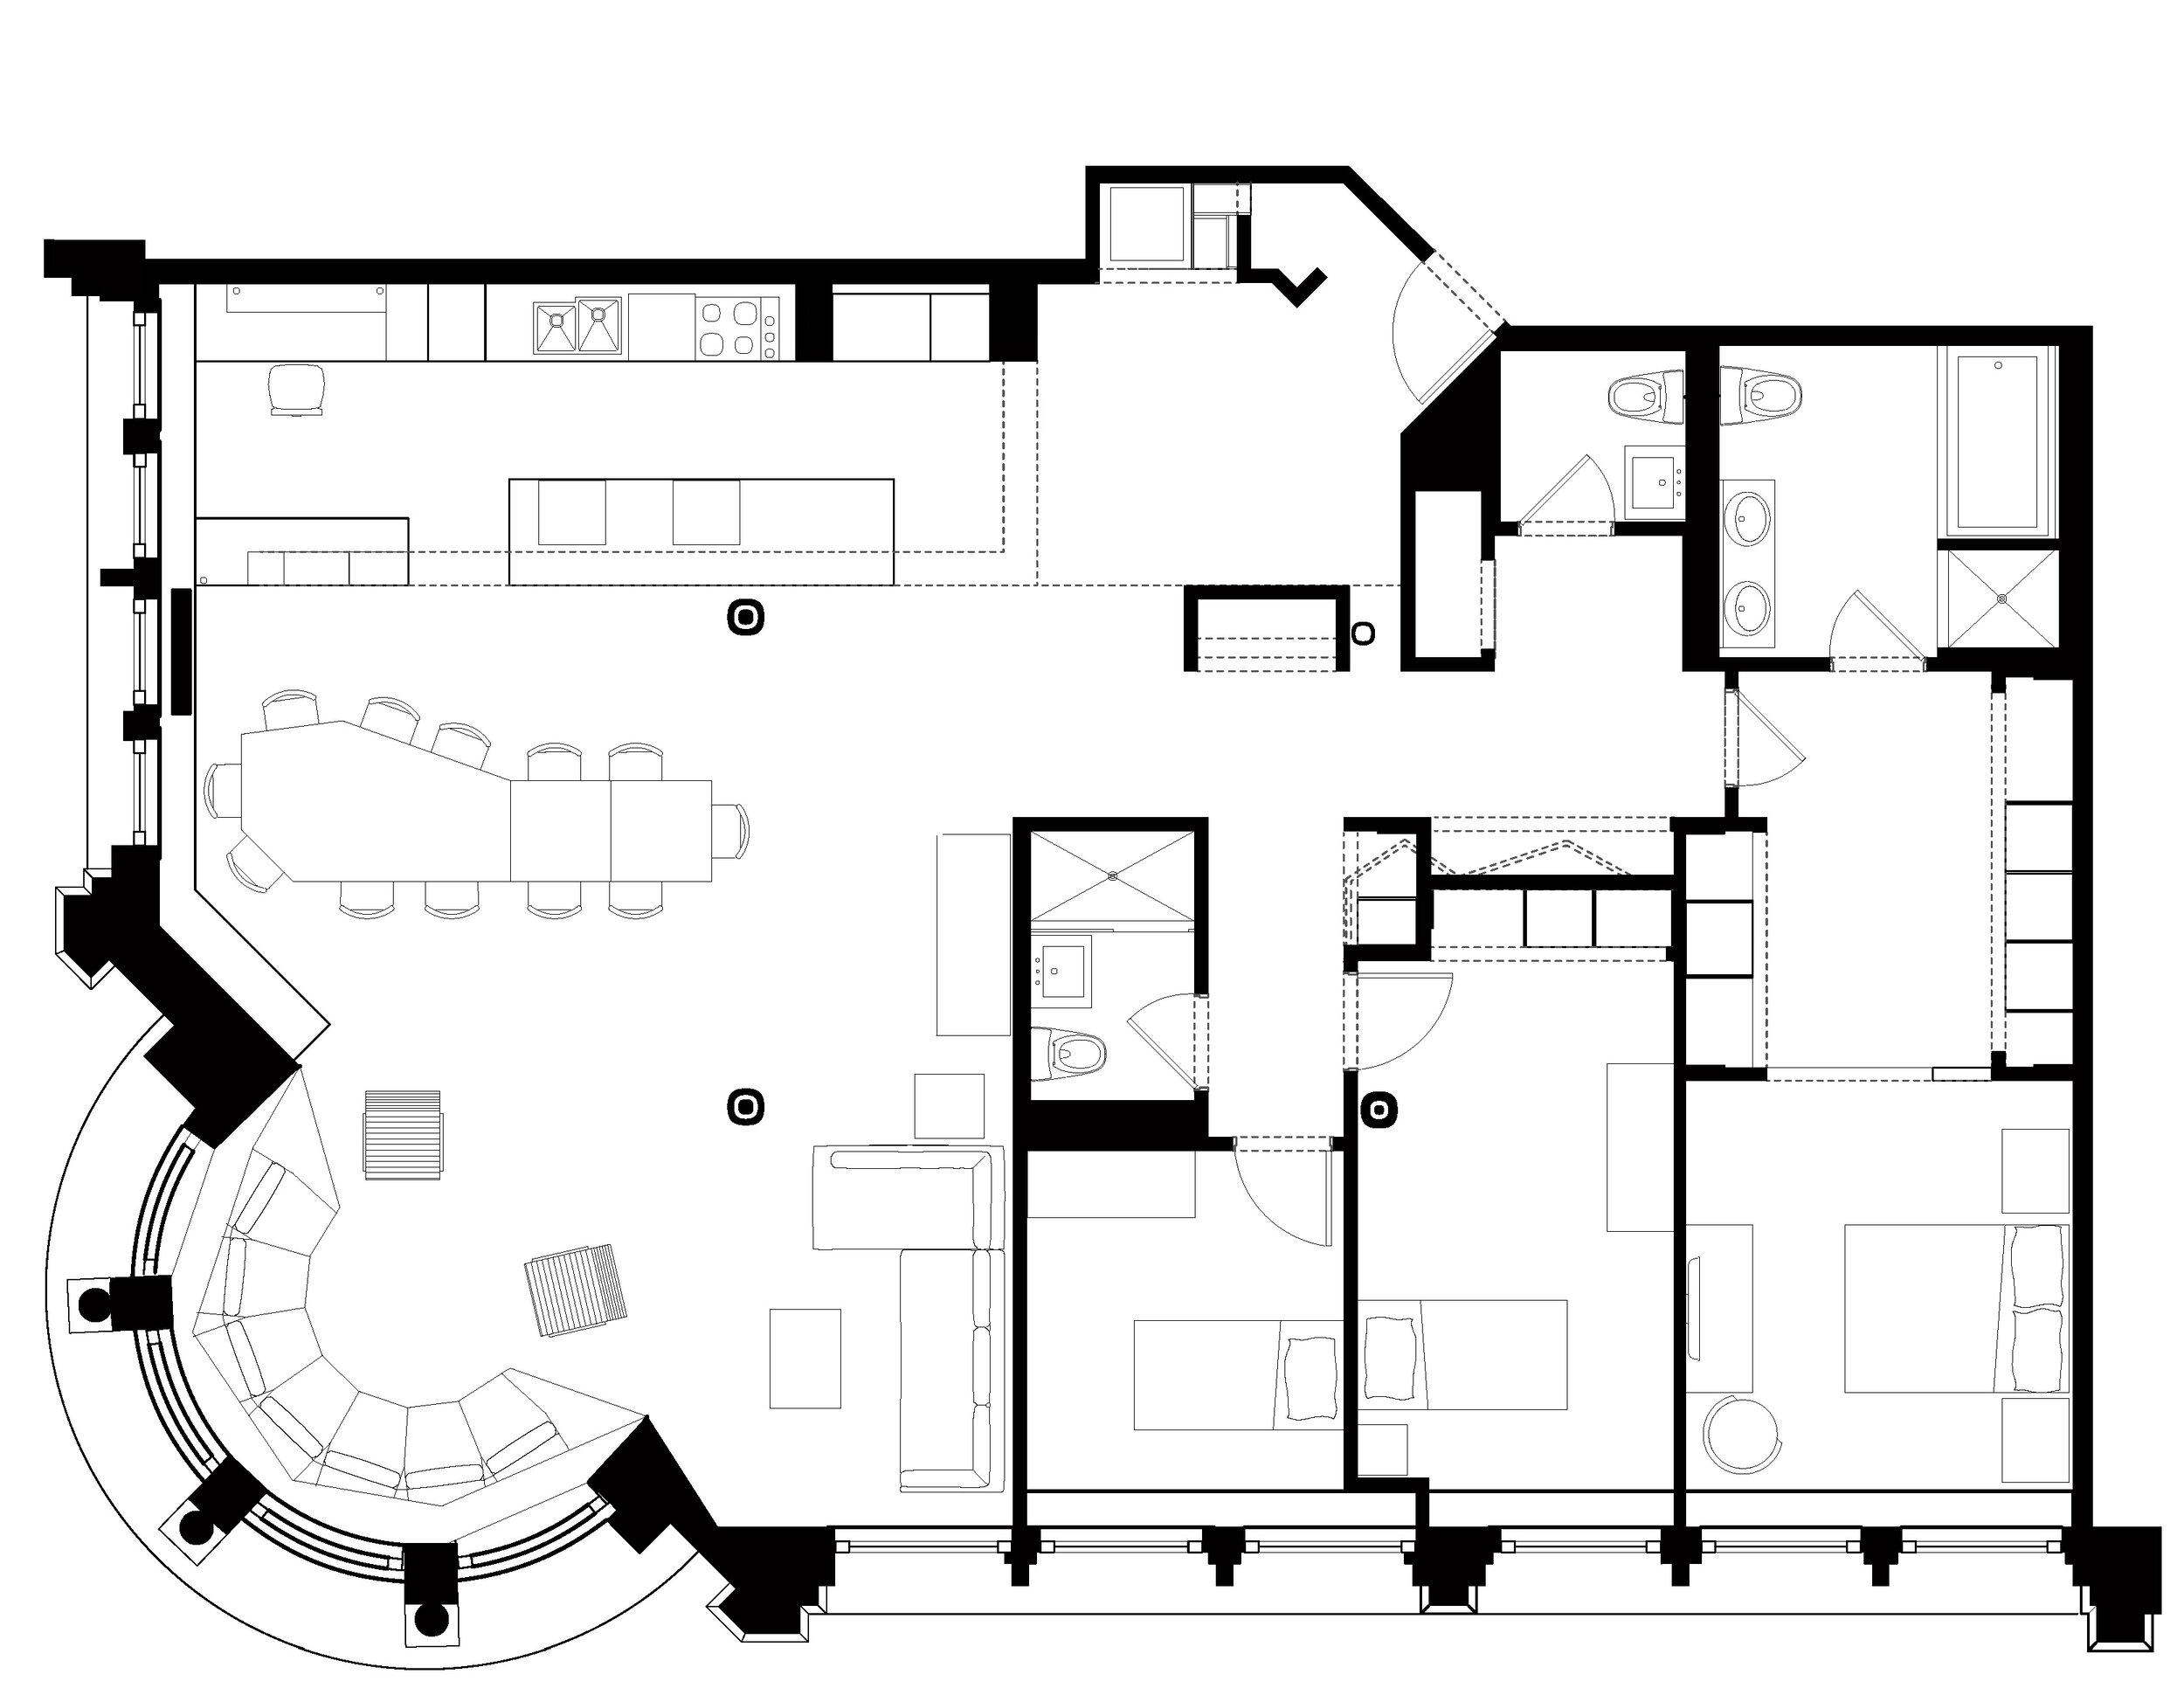 02_Floor plan.jpg